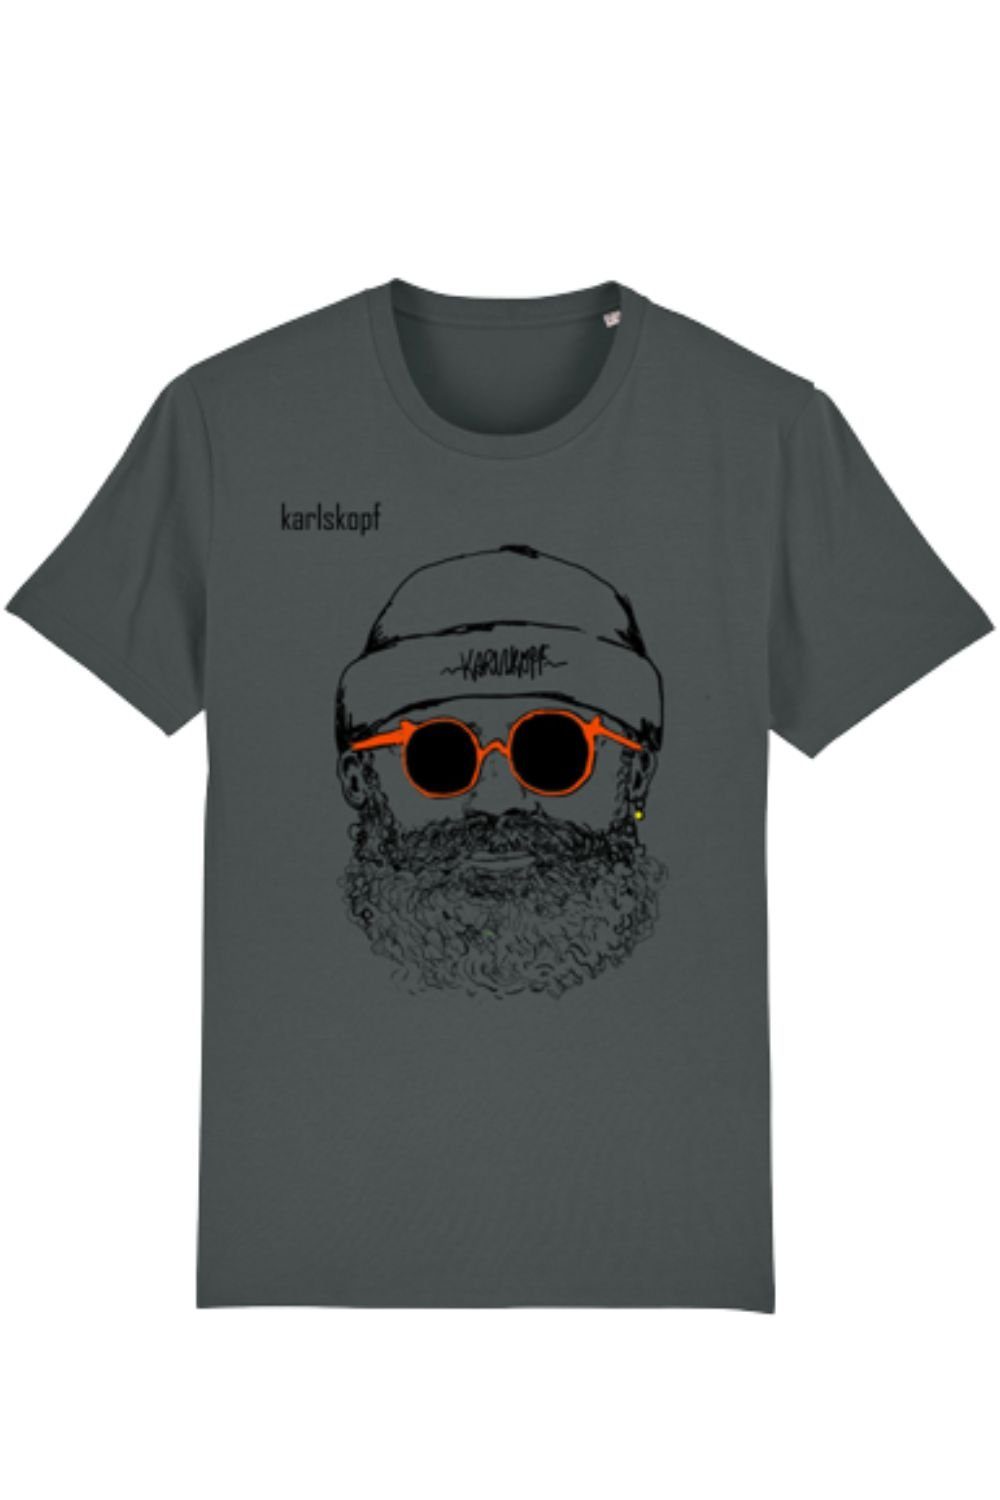 karlskopf Print-Shirt Rundhalsshirt Basic HIPSTER Anthrazit